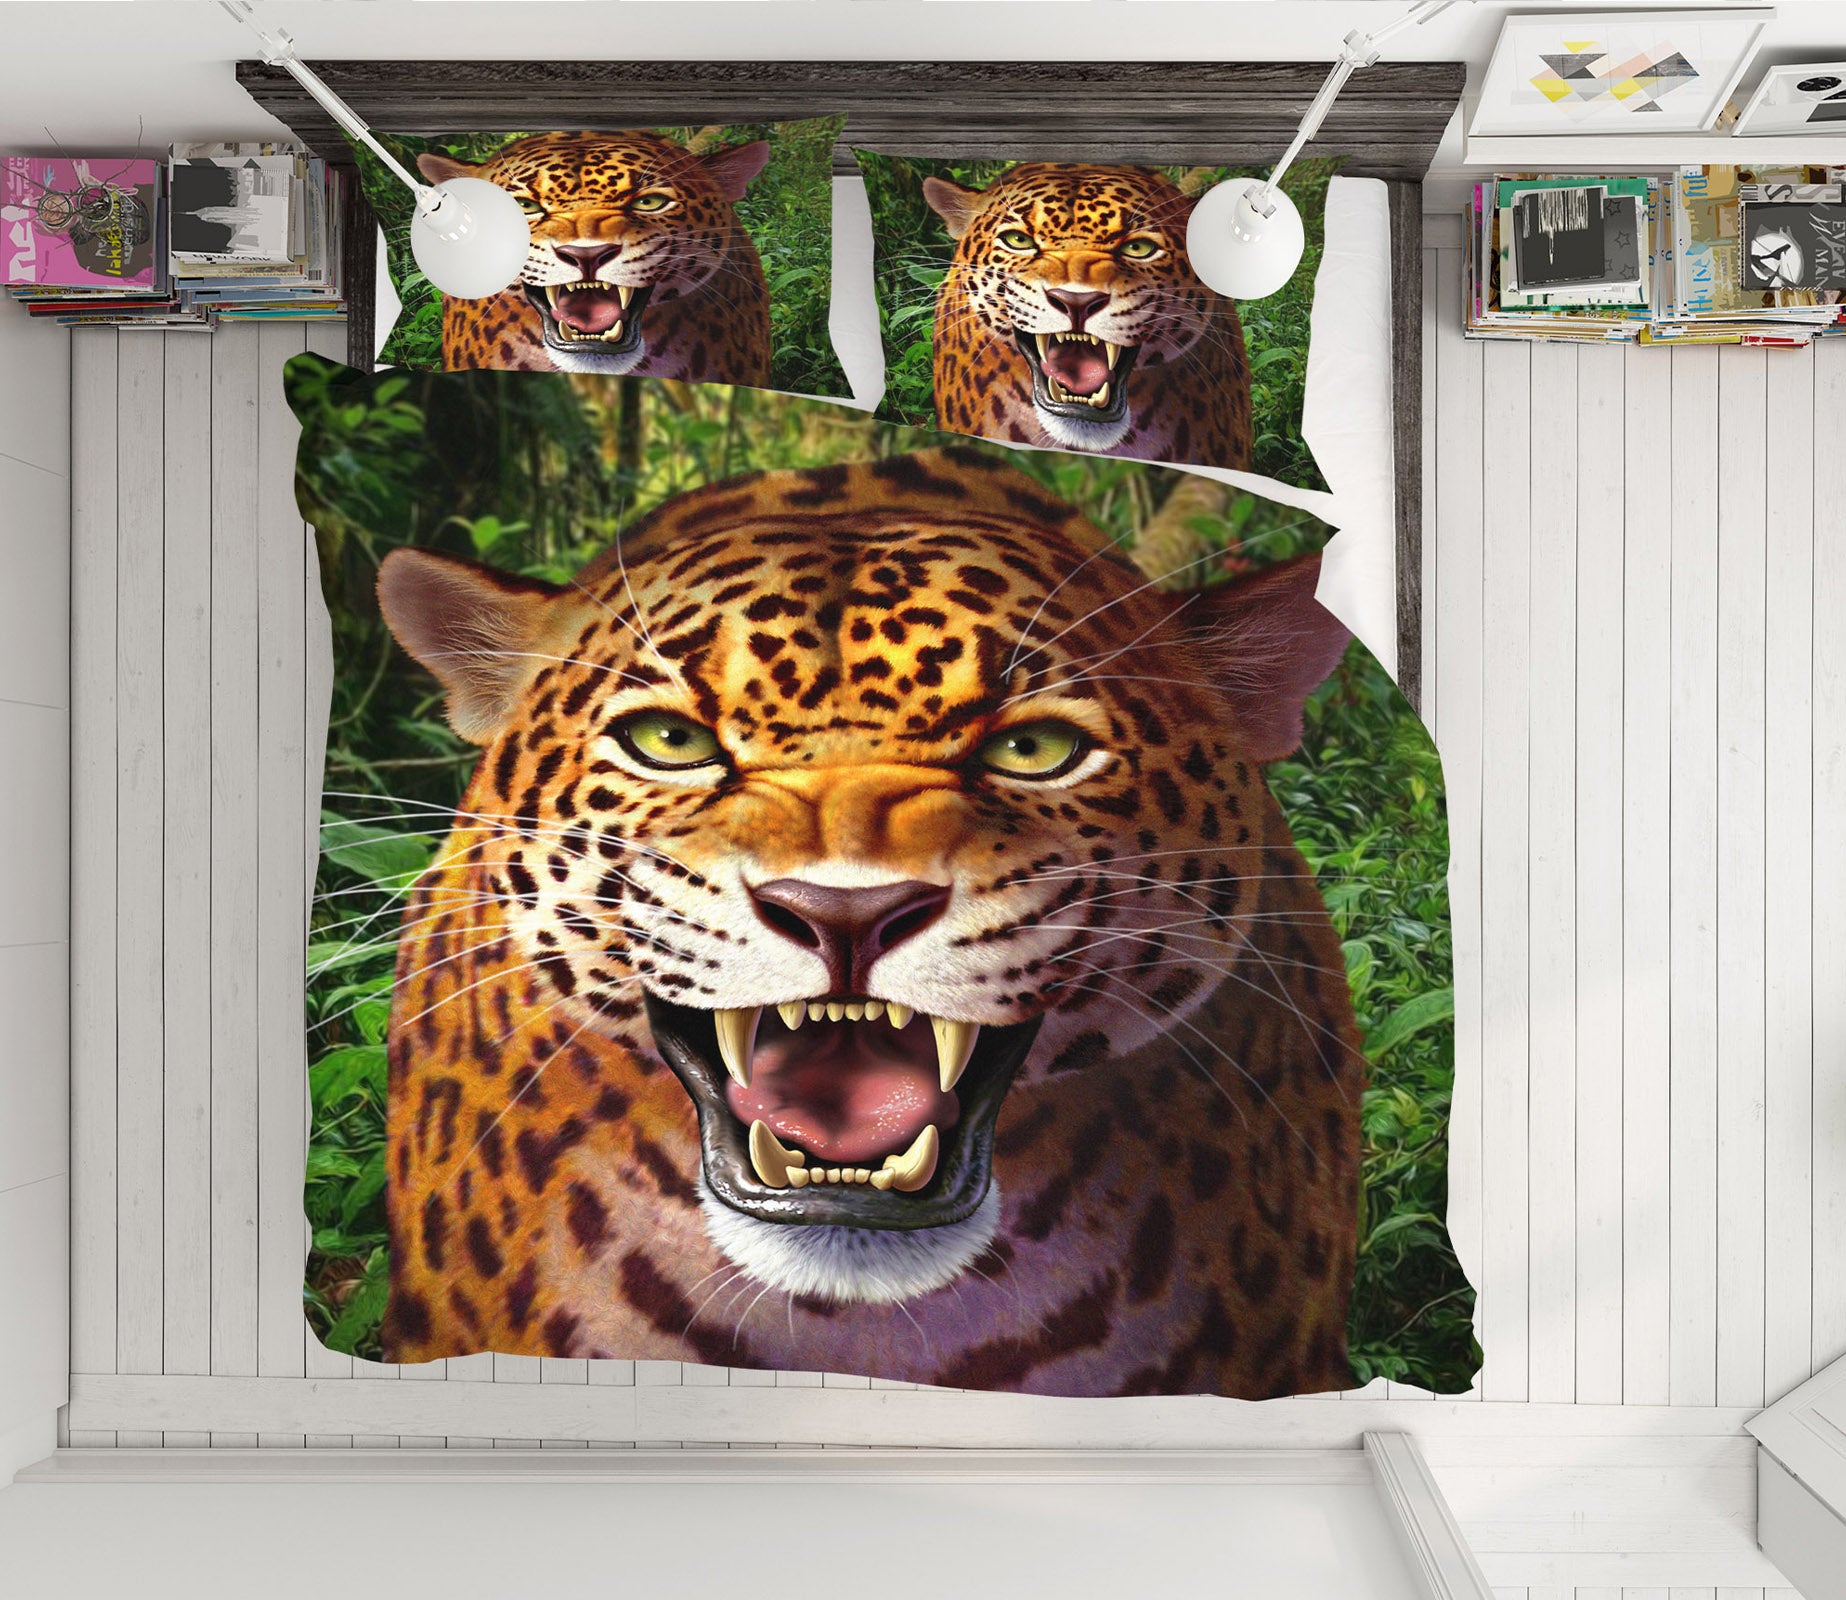 3D Leopard 86030 Jerry LoFaro bedding Bed Pillowcases Quilt